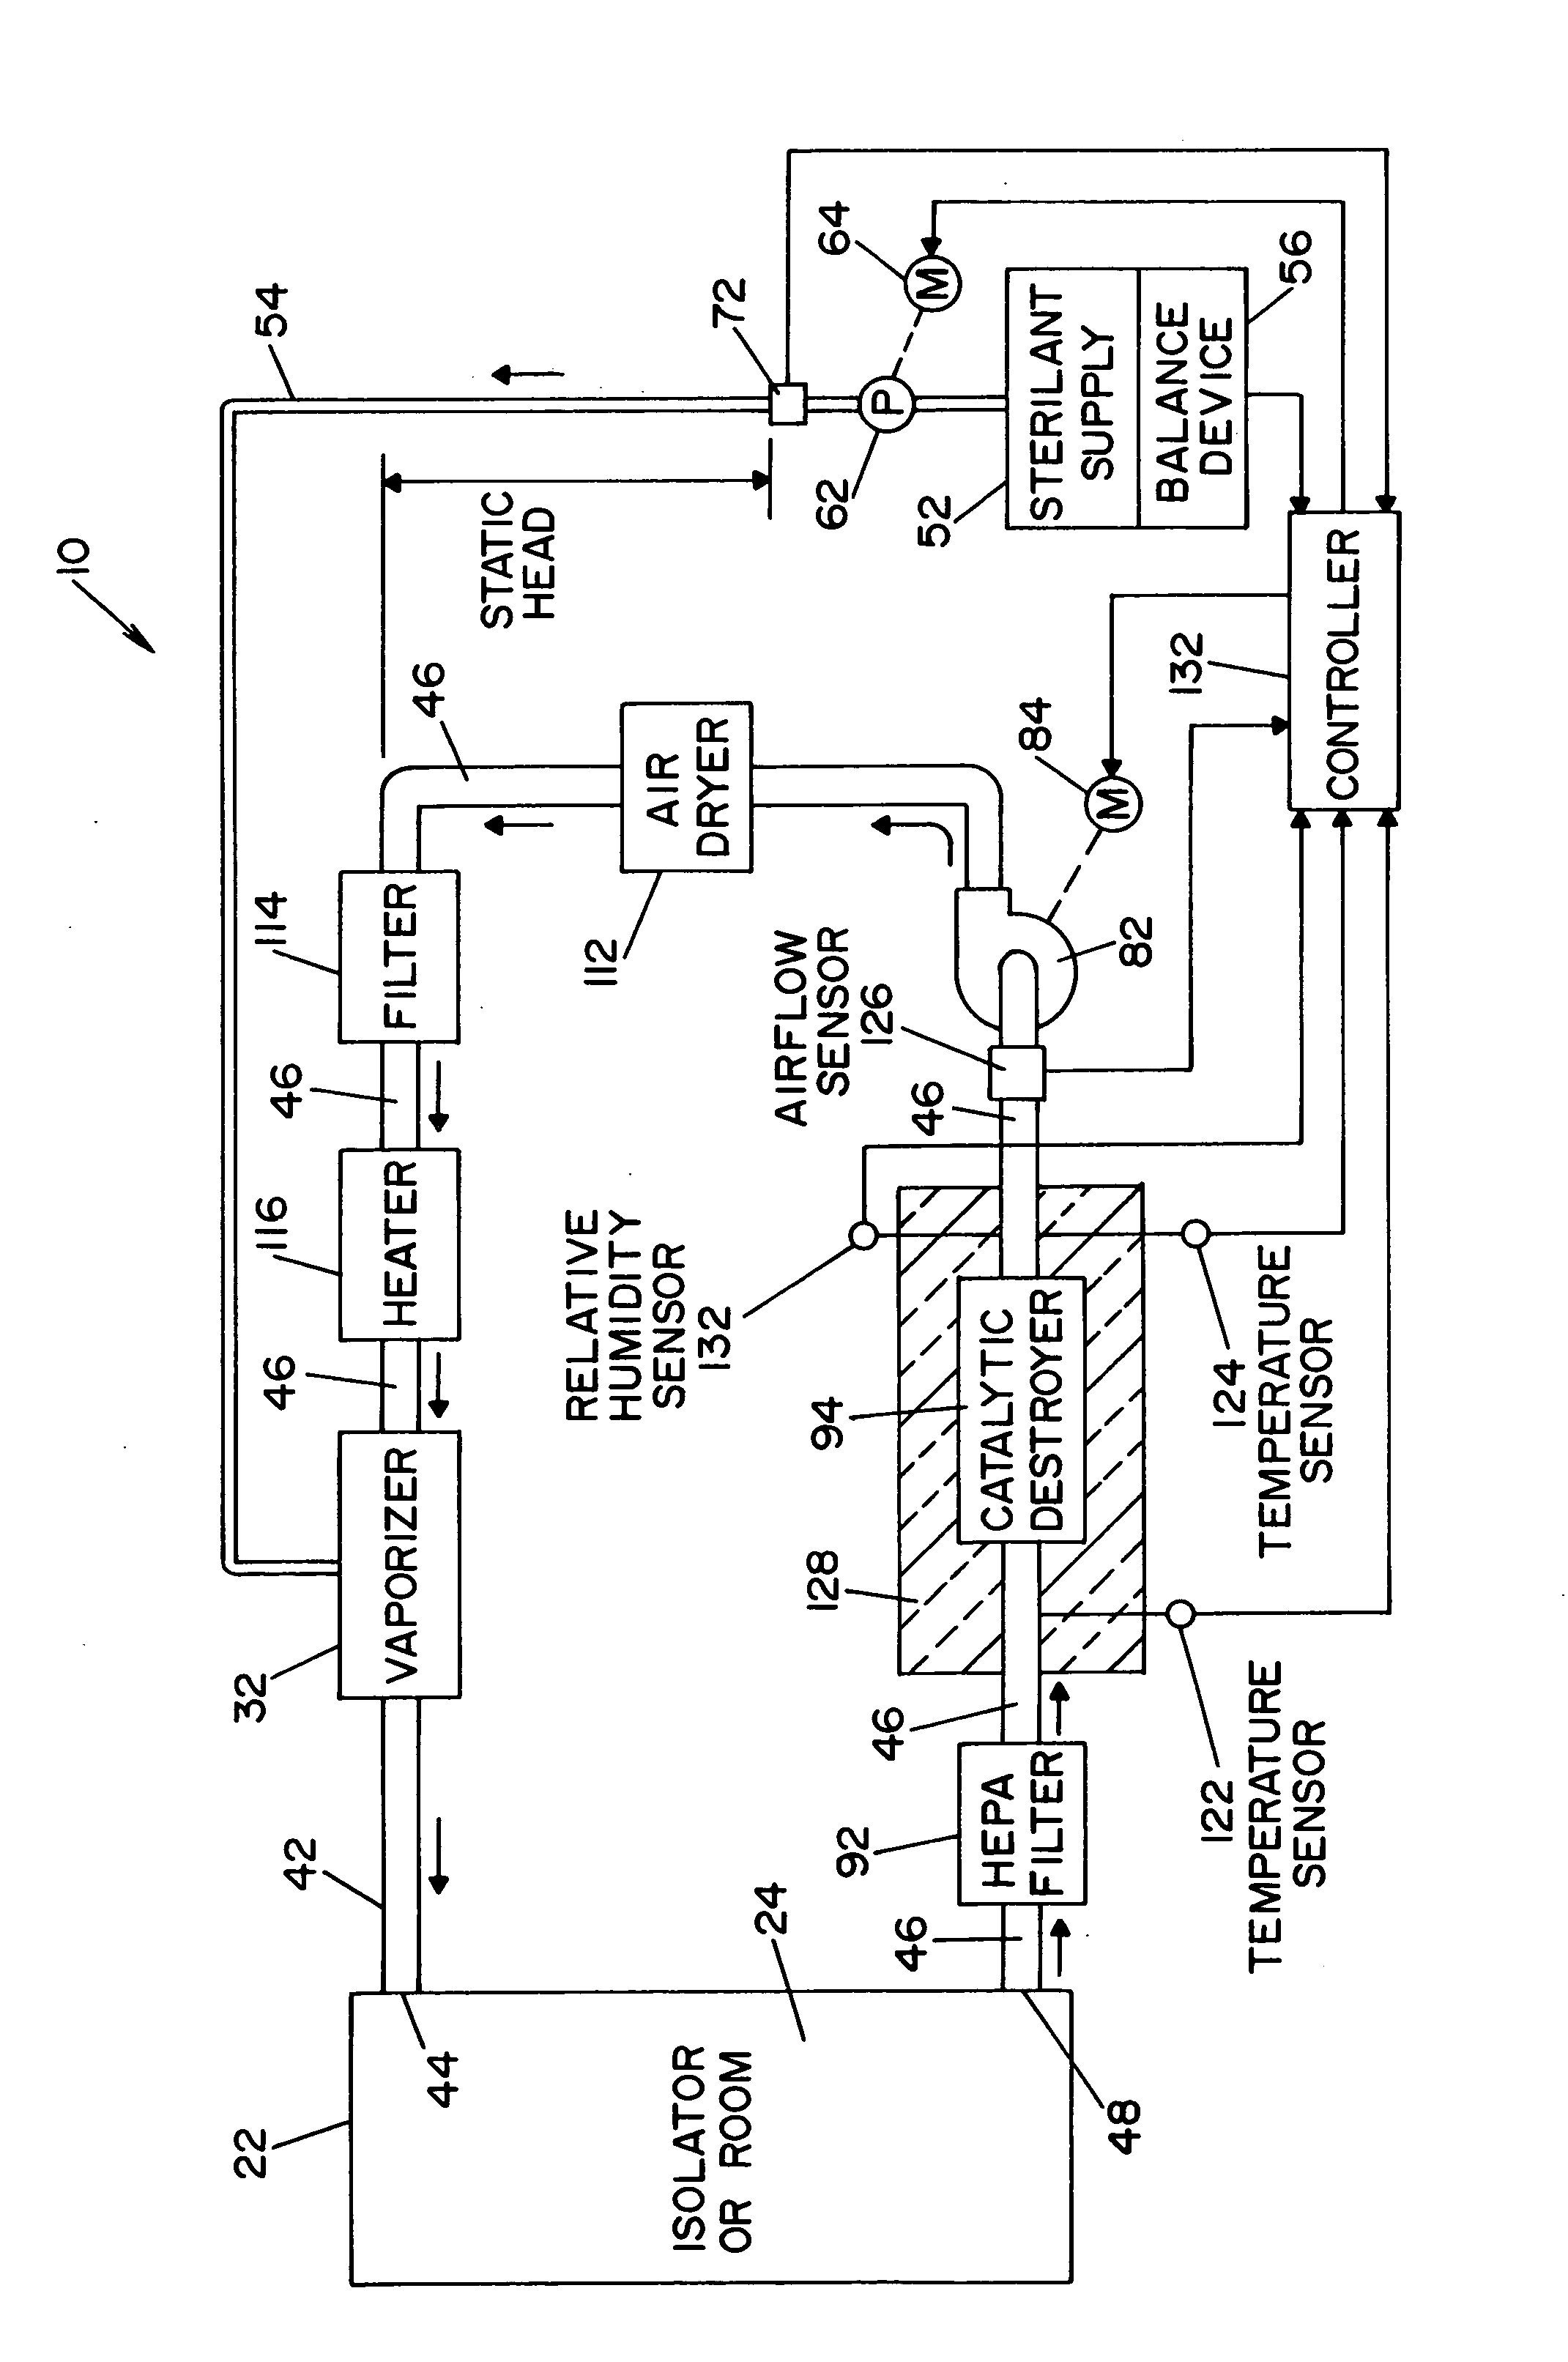 Vaporized hydrogen peroxide concentration detector